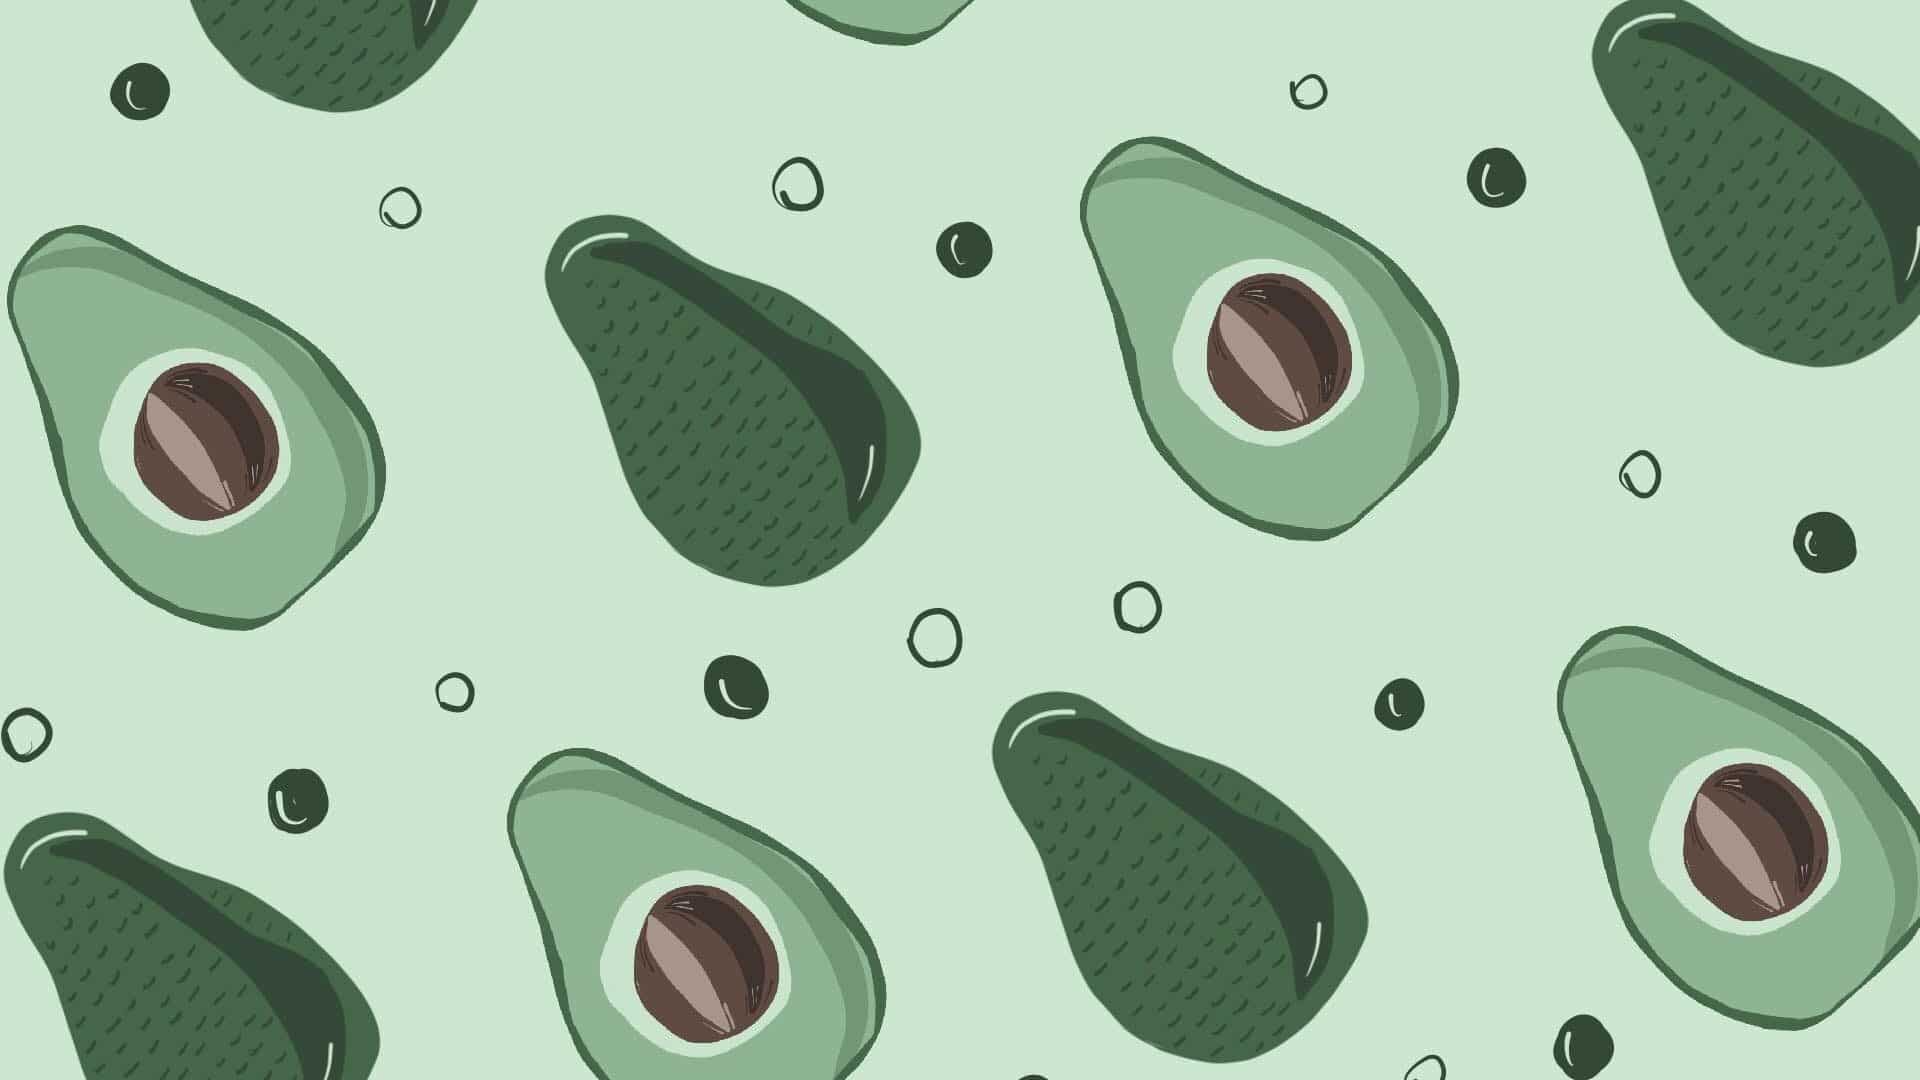 Let’s look closer at avocado health benefits